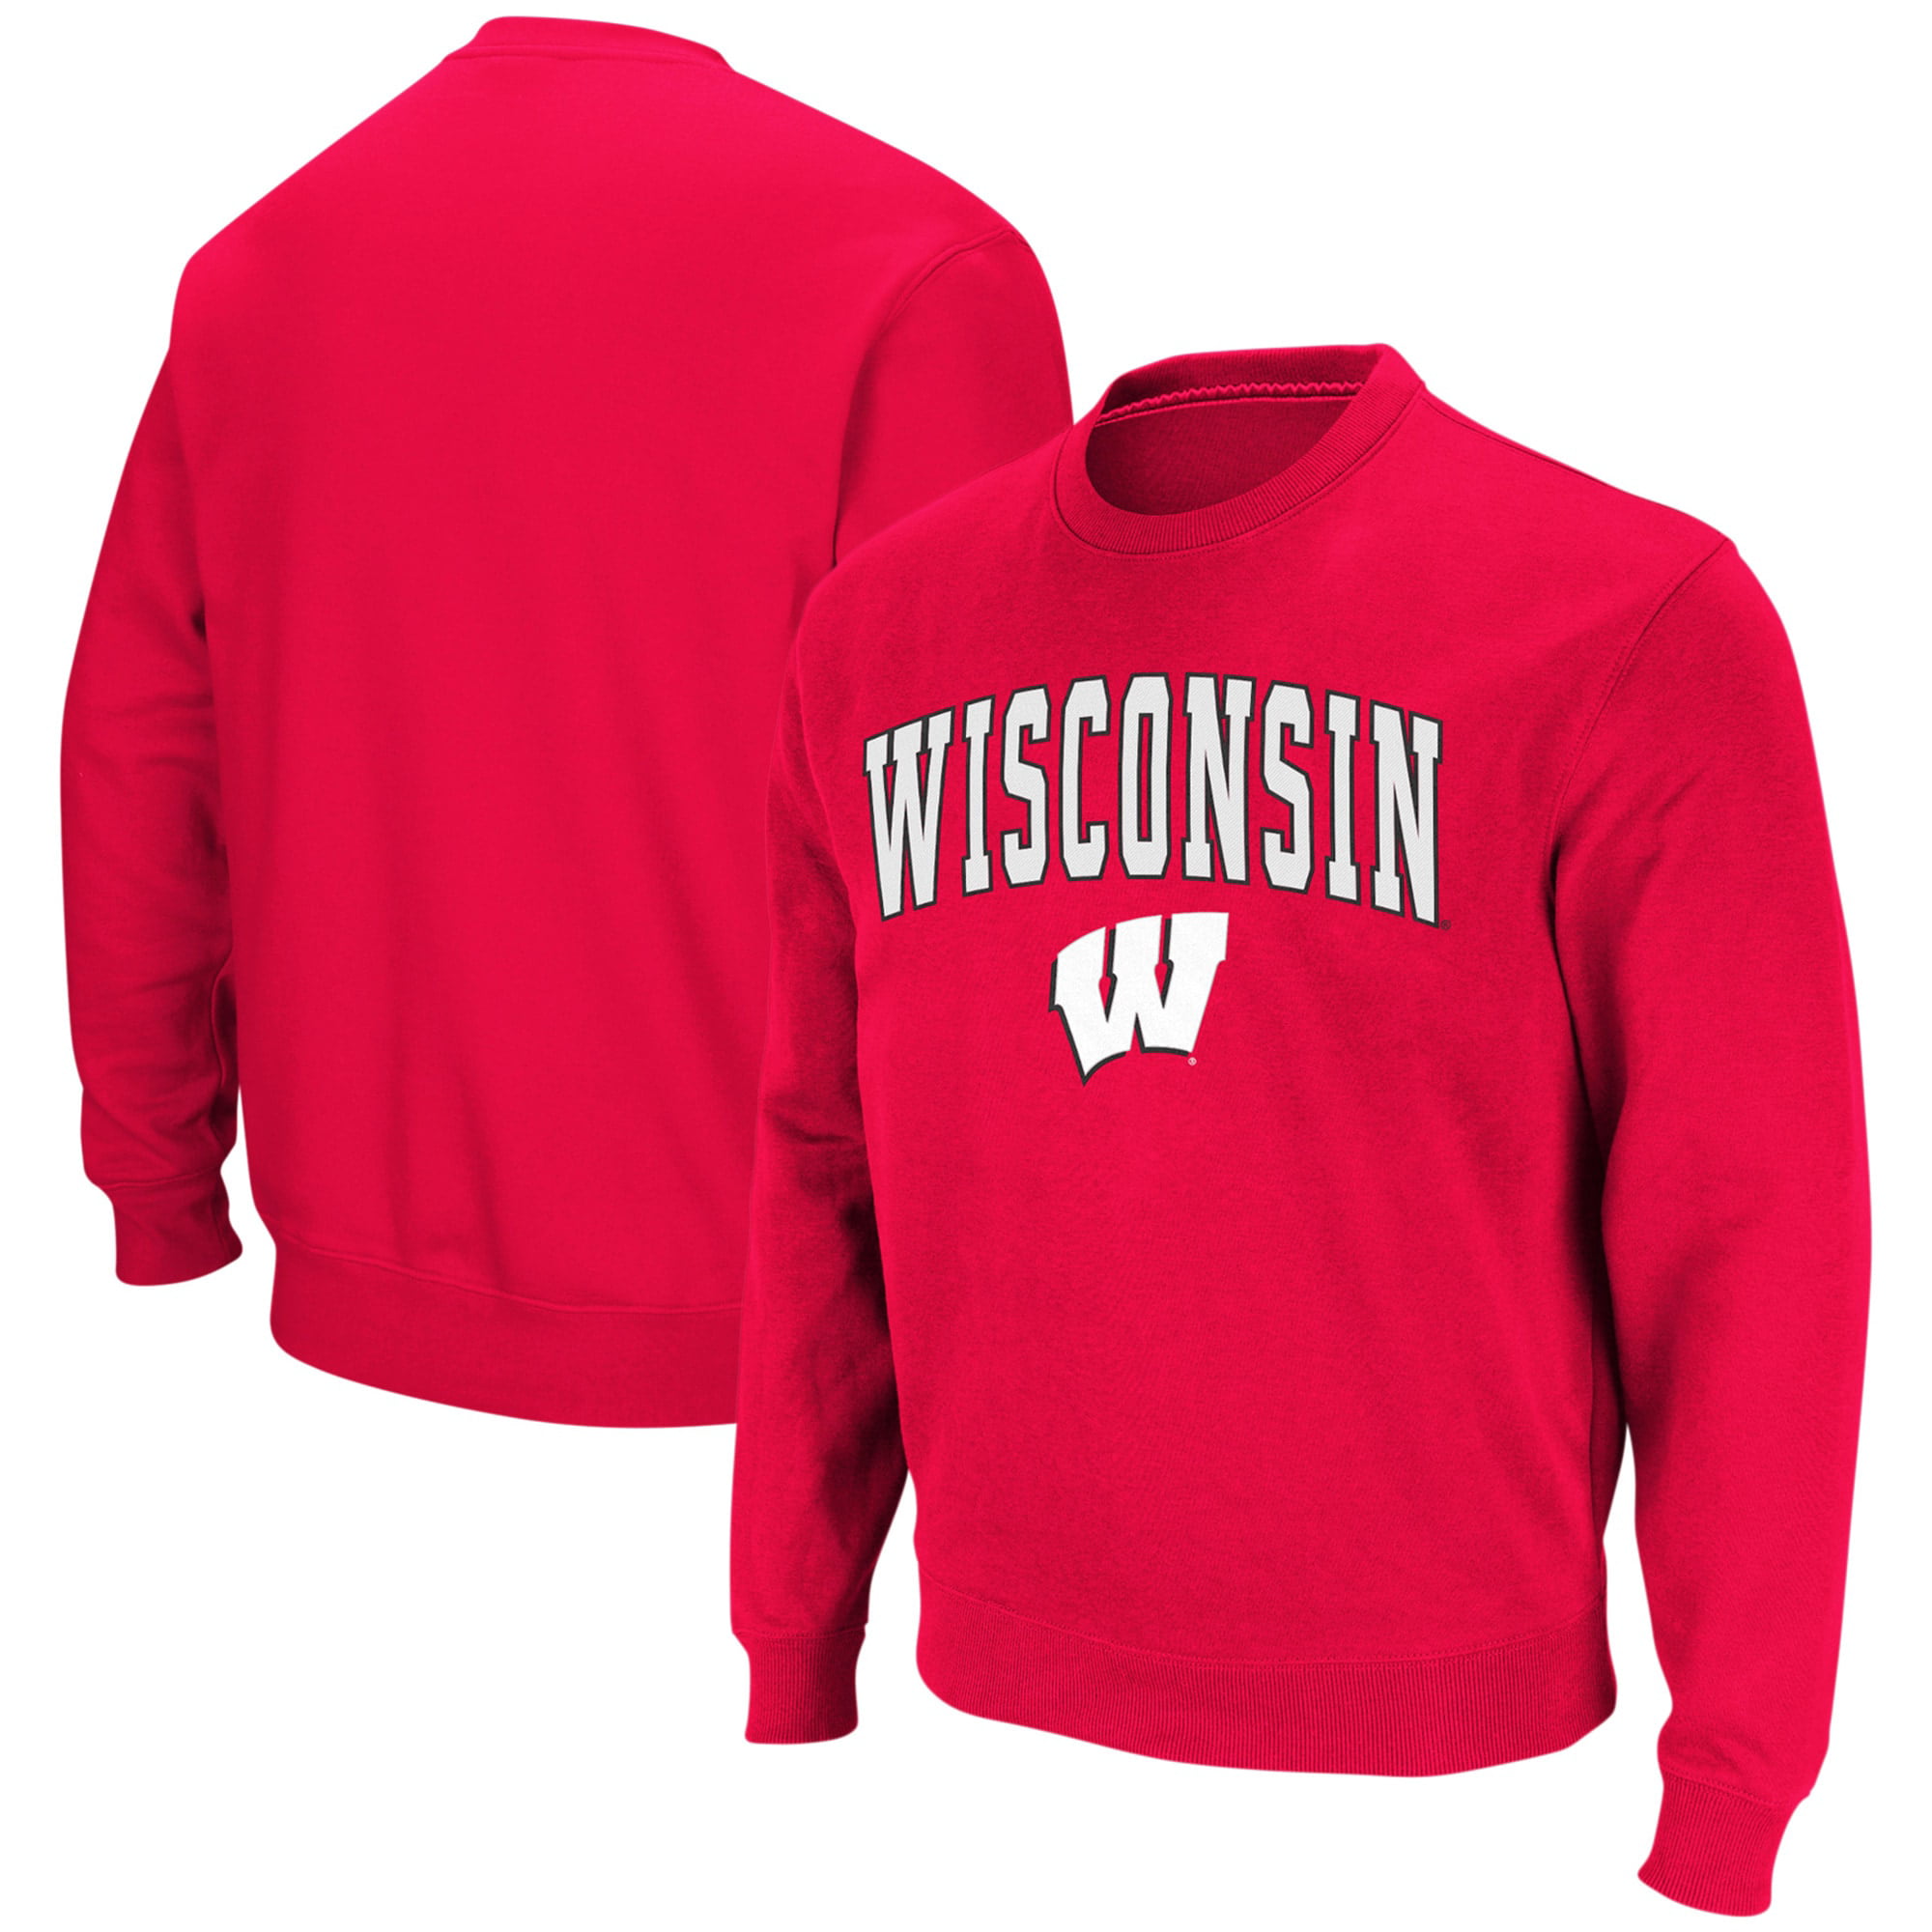 Wisconsin Crewneck State Sweatshirt Wisconsin Sweatshirt Wisconsin Shirt College Sweatshirt State Gifts Unisex Sweatshirt